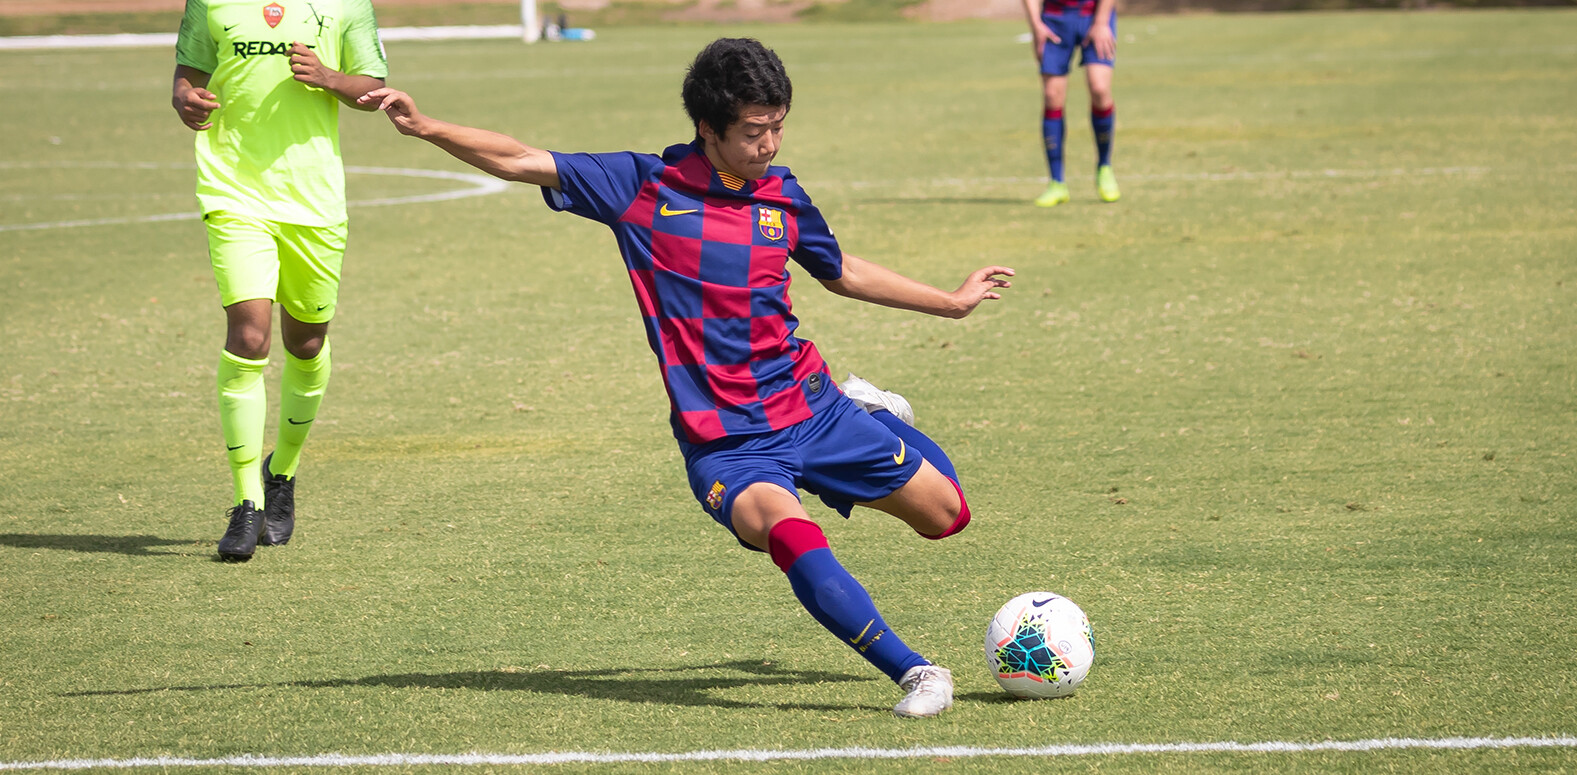 Takumi Ikeda striking the ball down the field